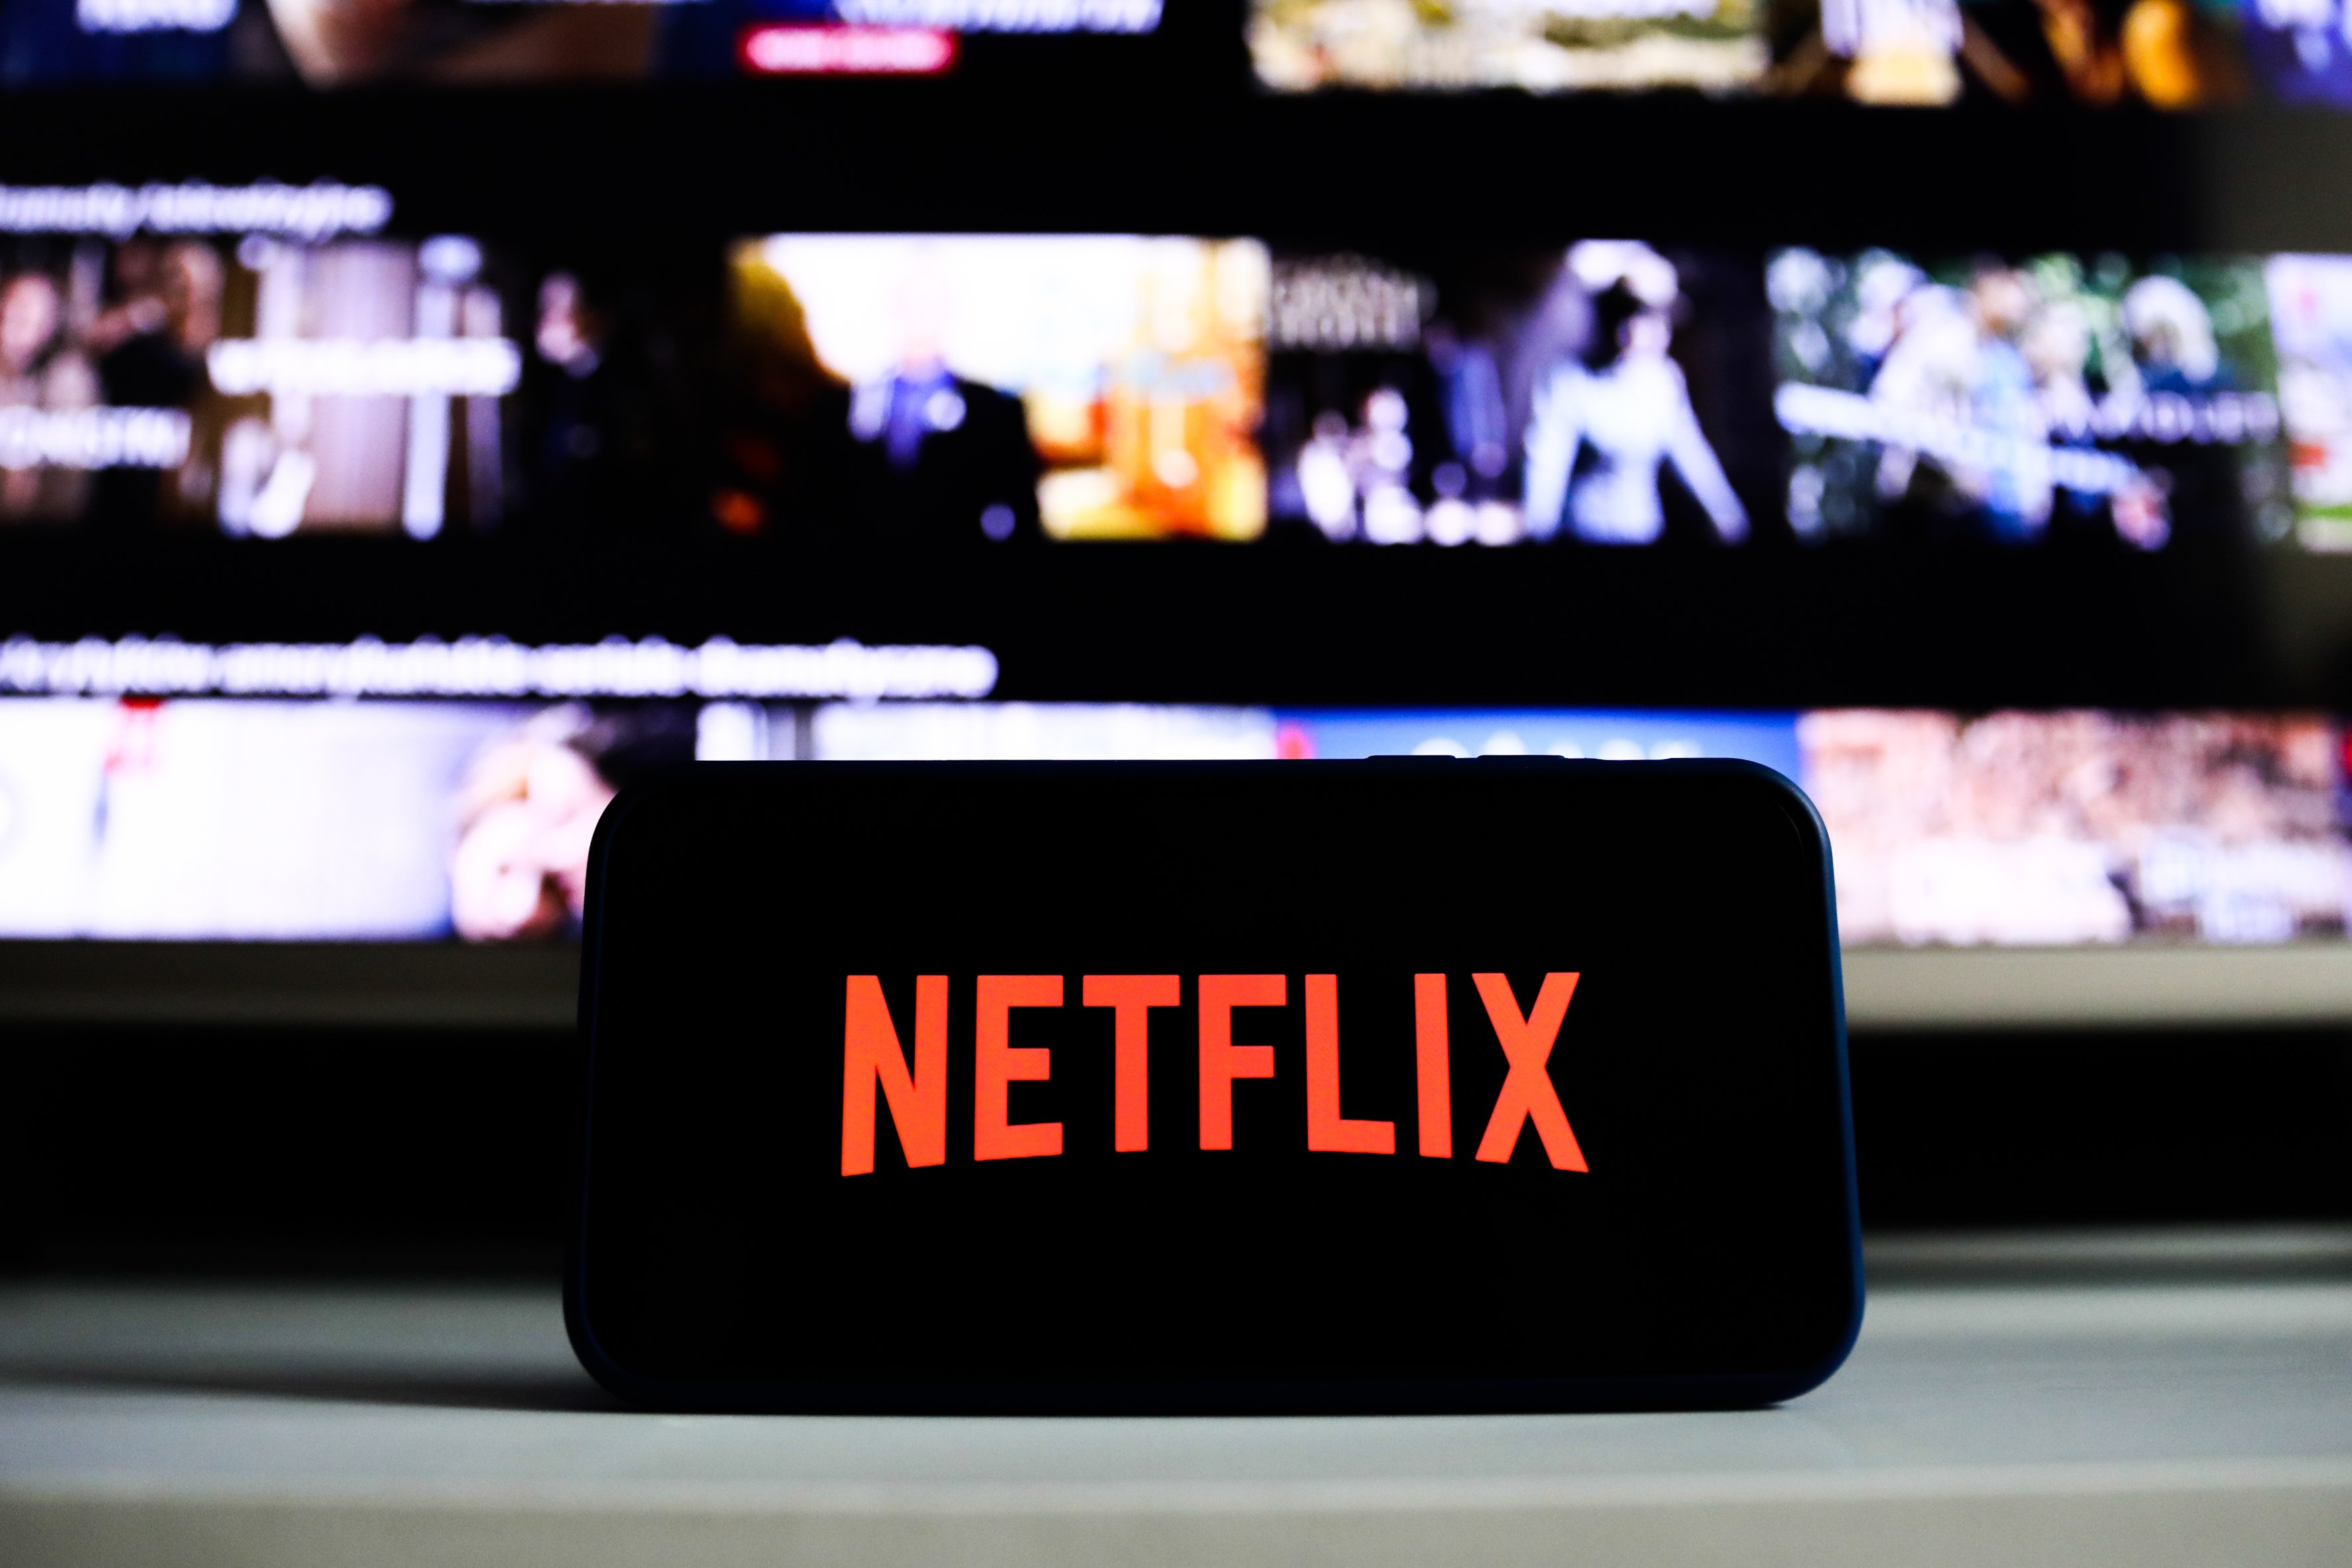 Netflix logo is seen displayed on phone screen